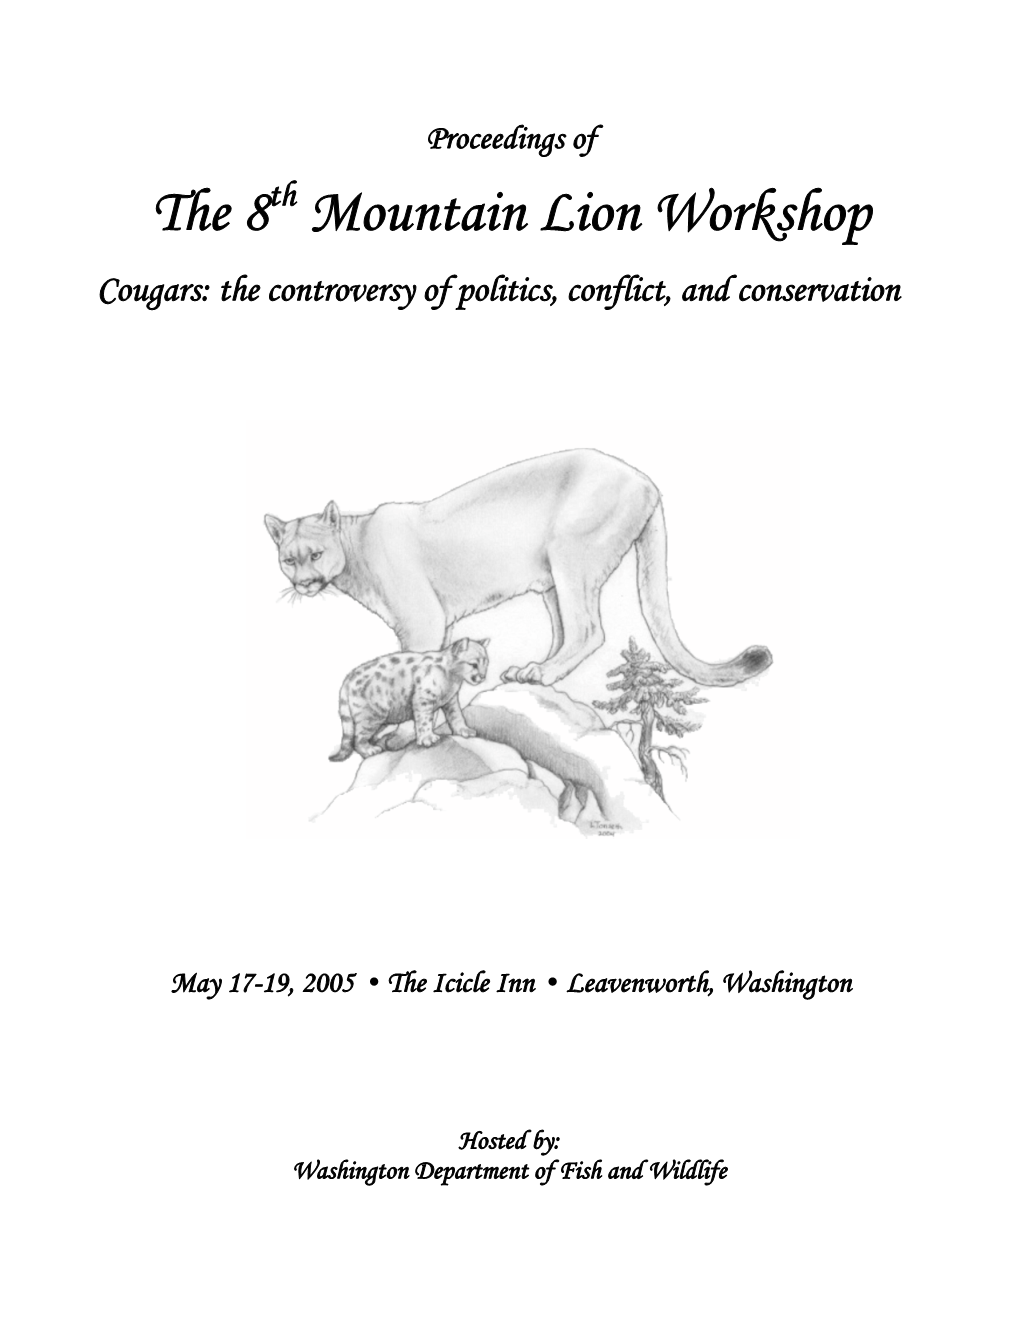 The 8 Mountain Lion Workshop